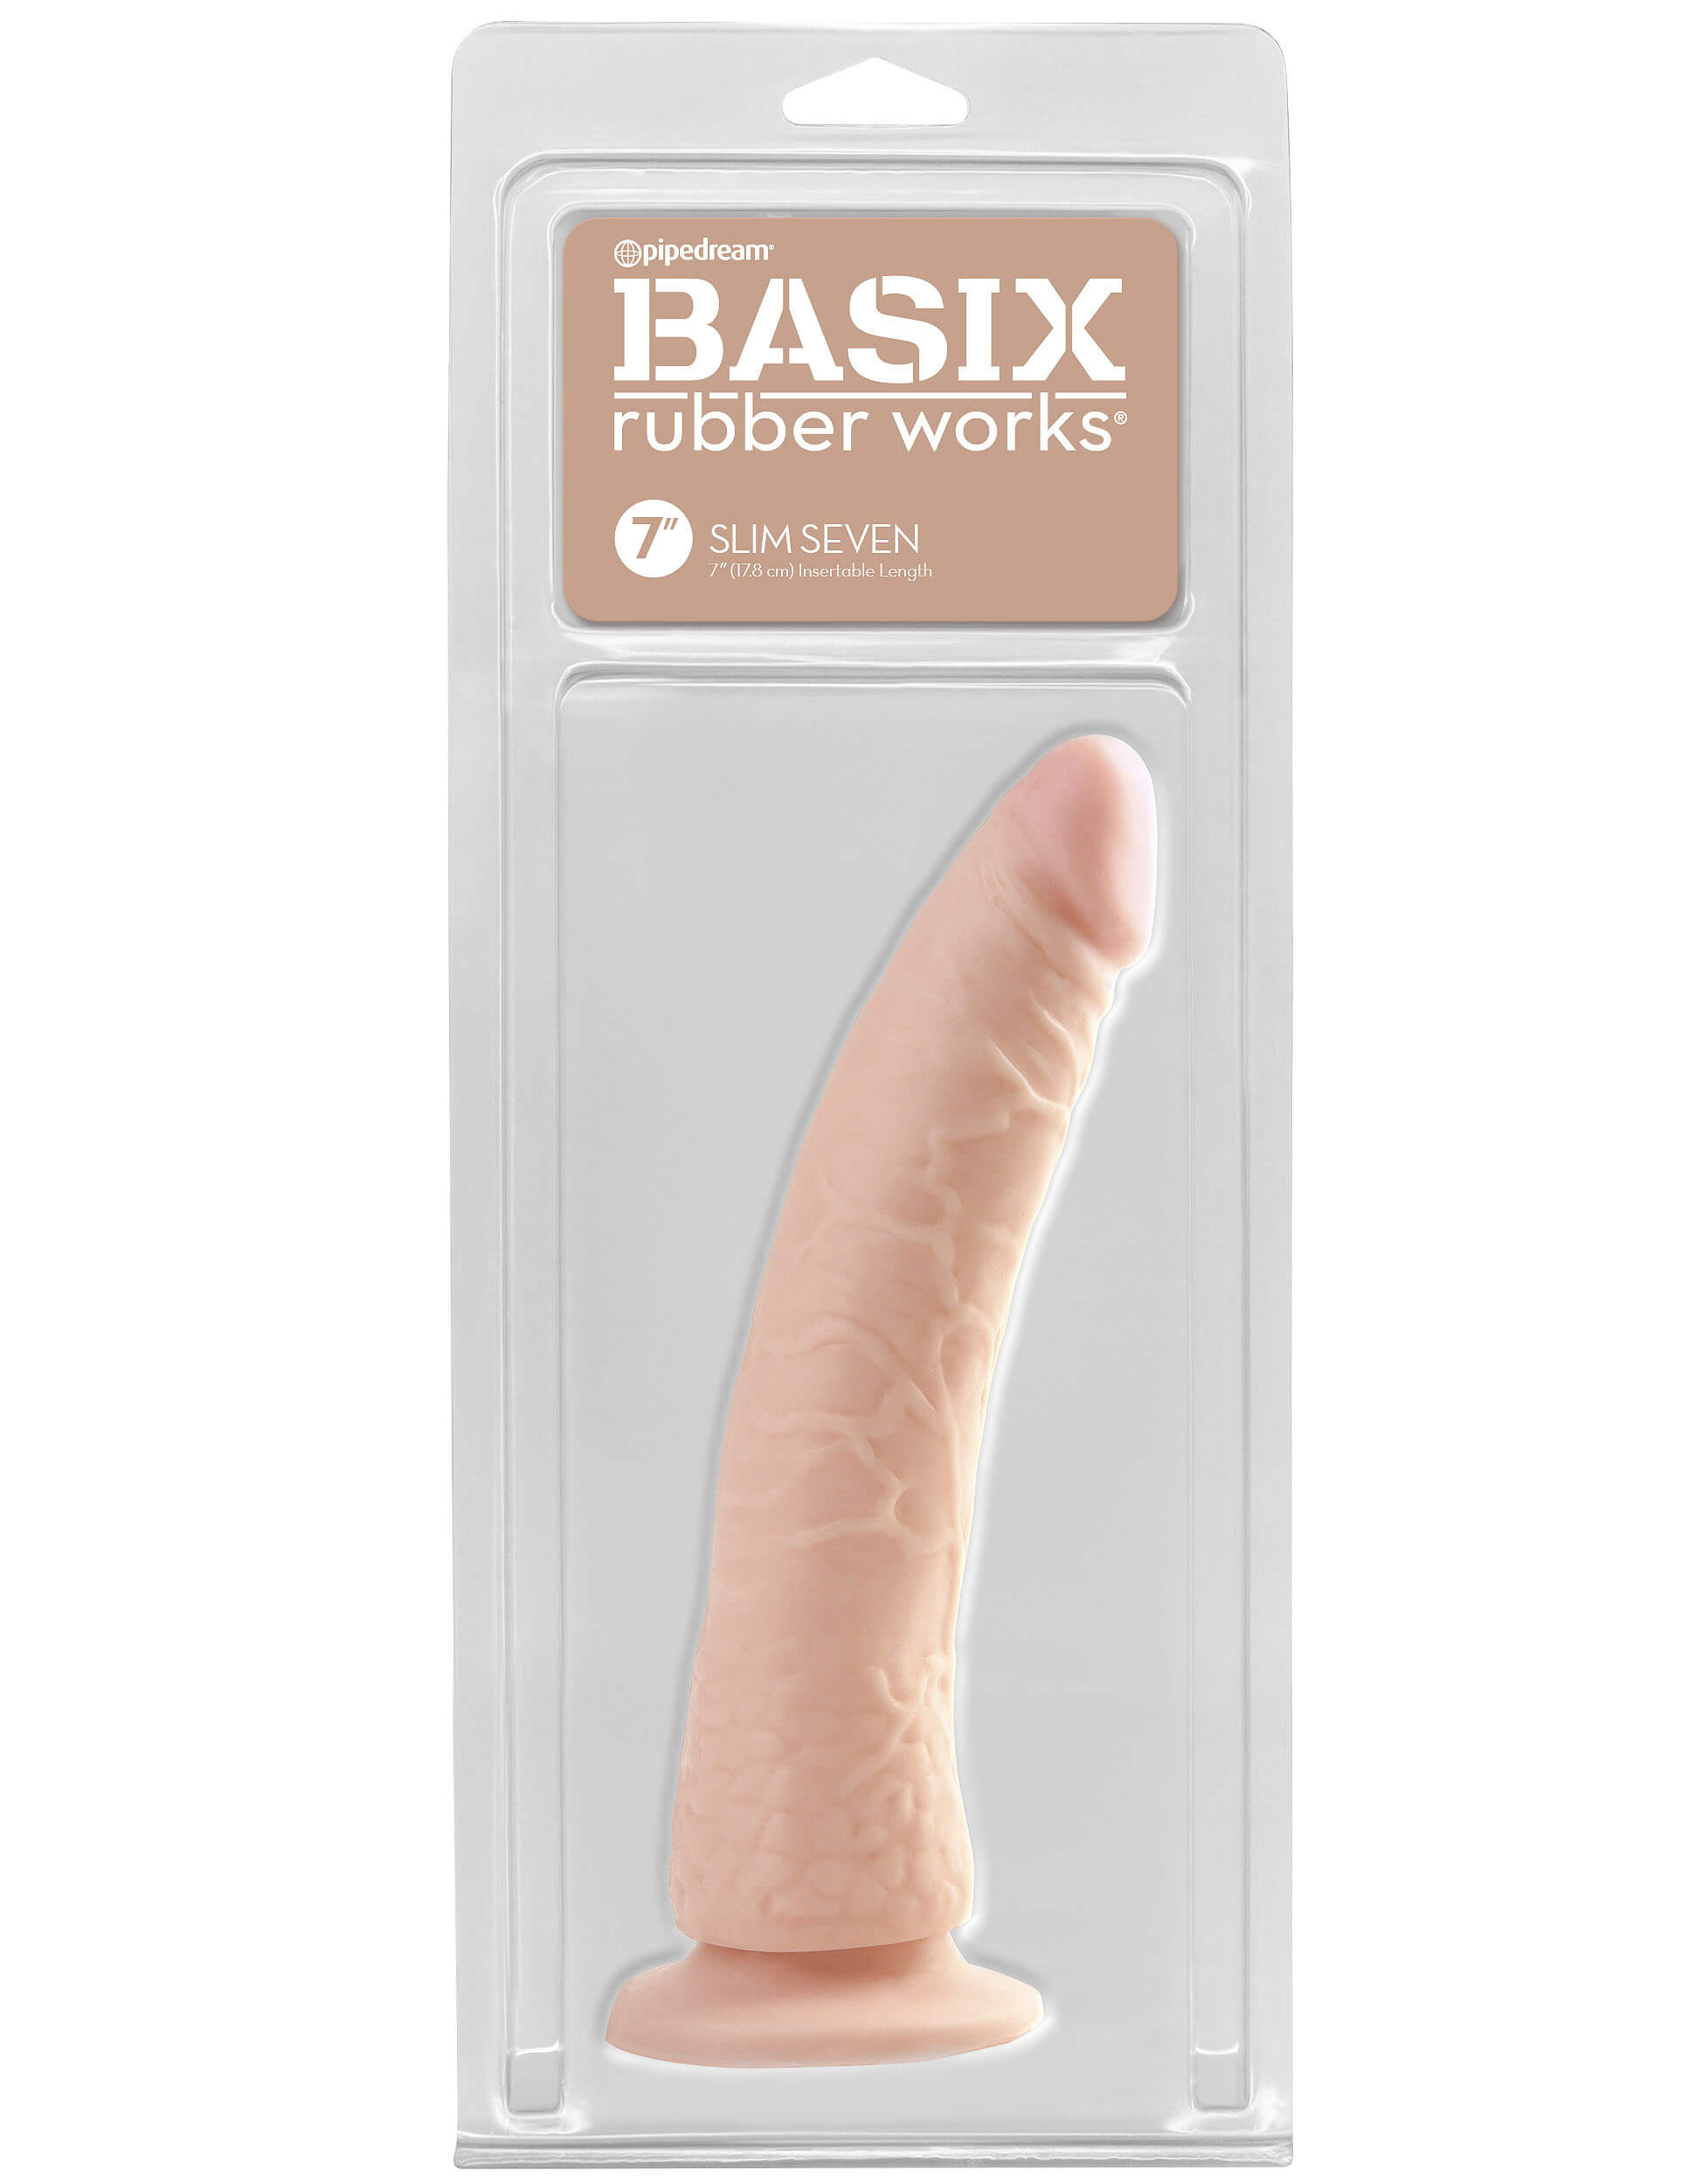 Basix Rubber Works Slim 7 flesh